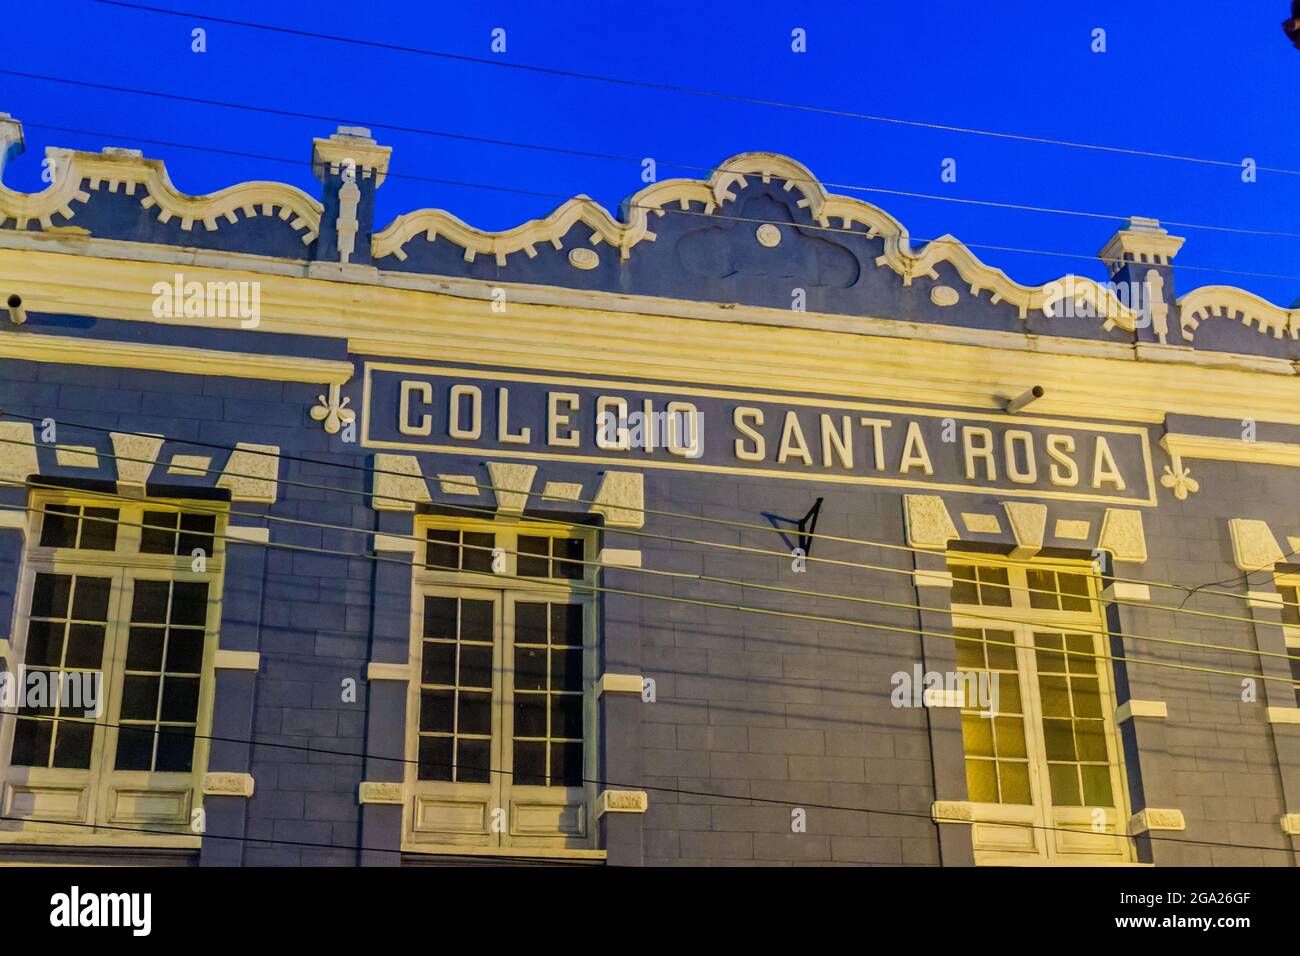 POTOSI, BOLIVIA - APRIL 17, 2015: Building of school Colegio Santa Rosa in Potosi, Bolivia. Stock Photo